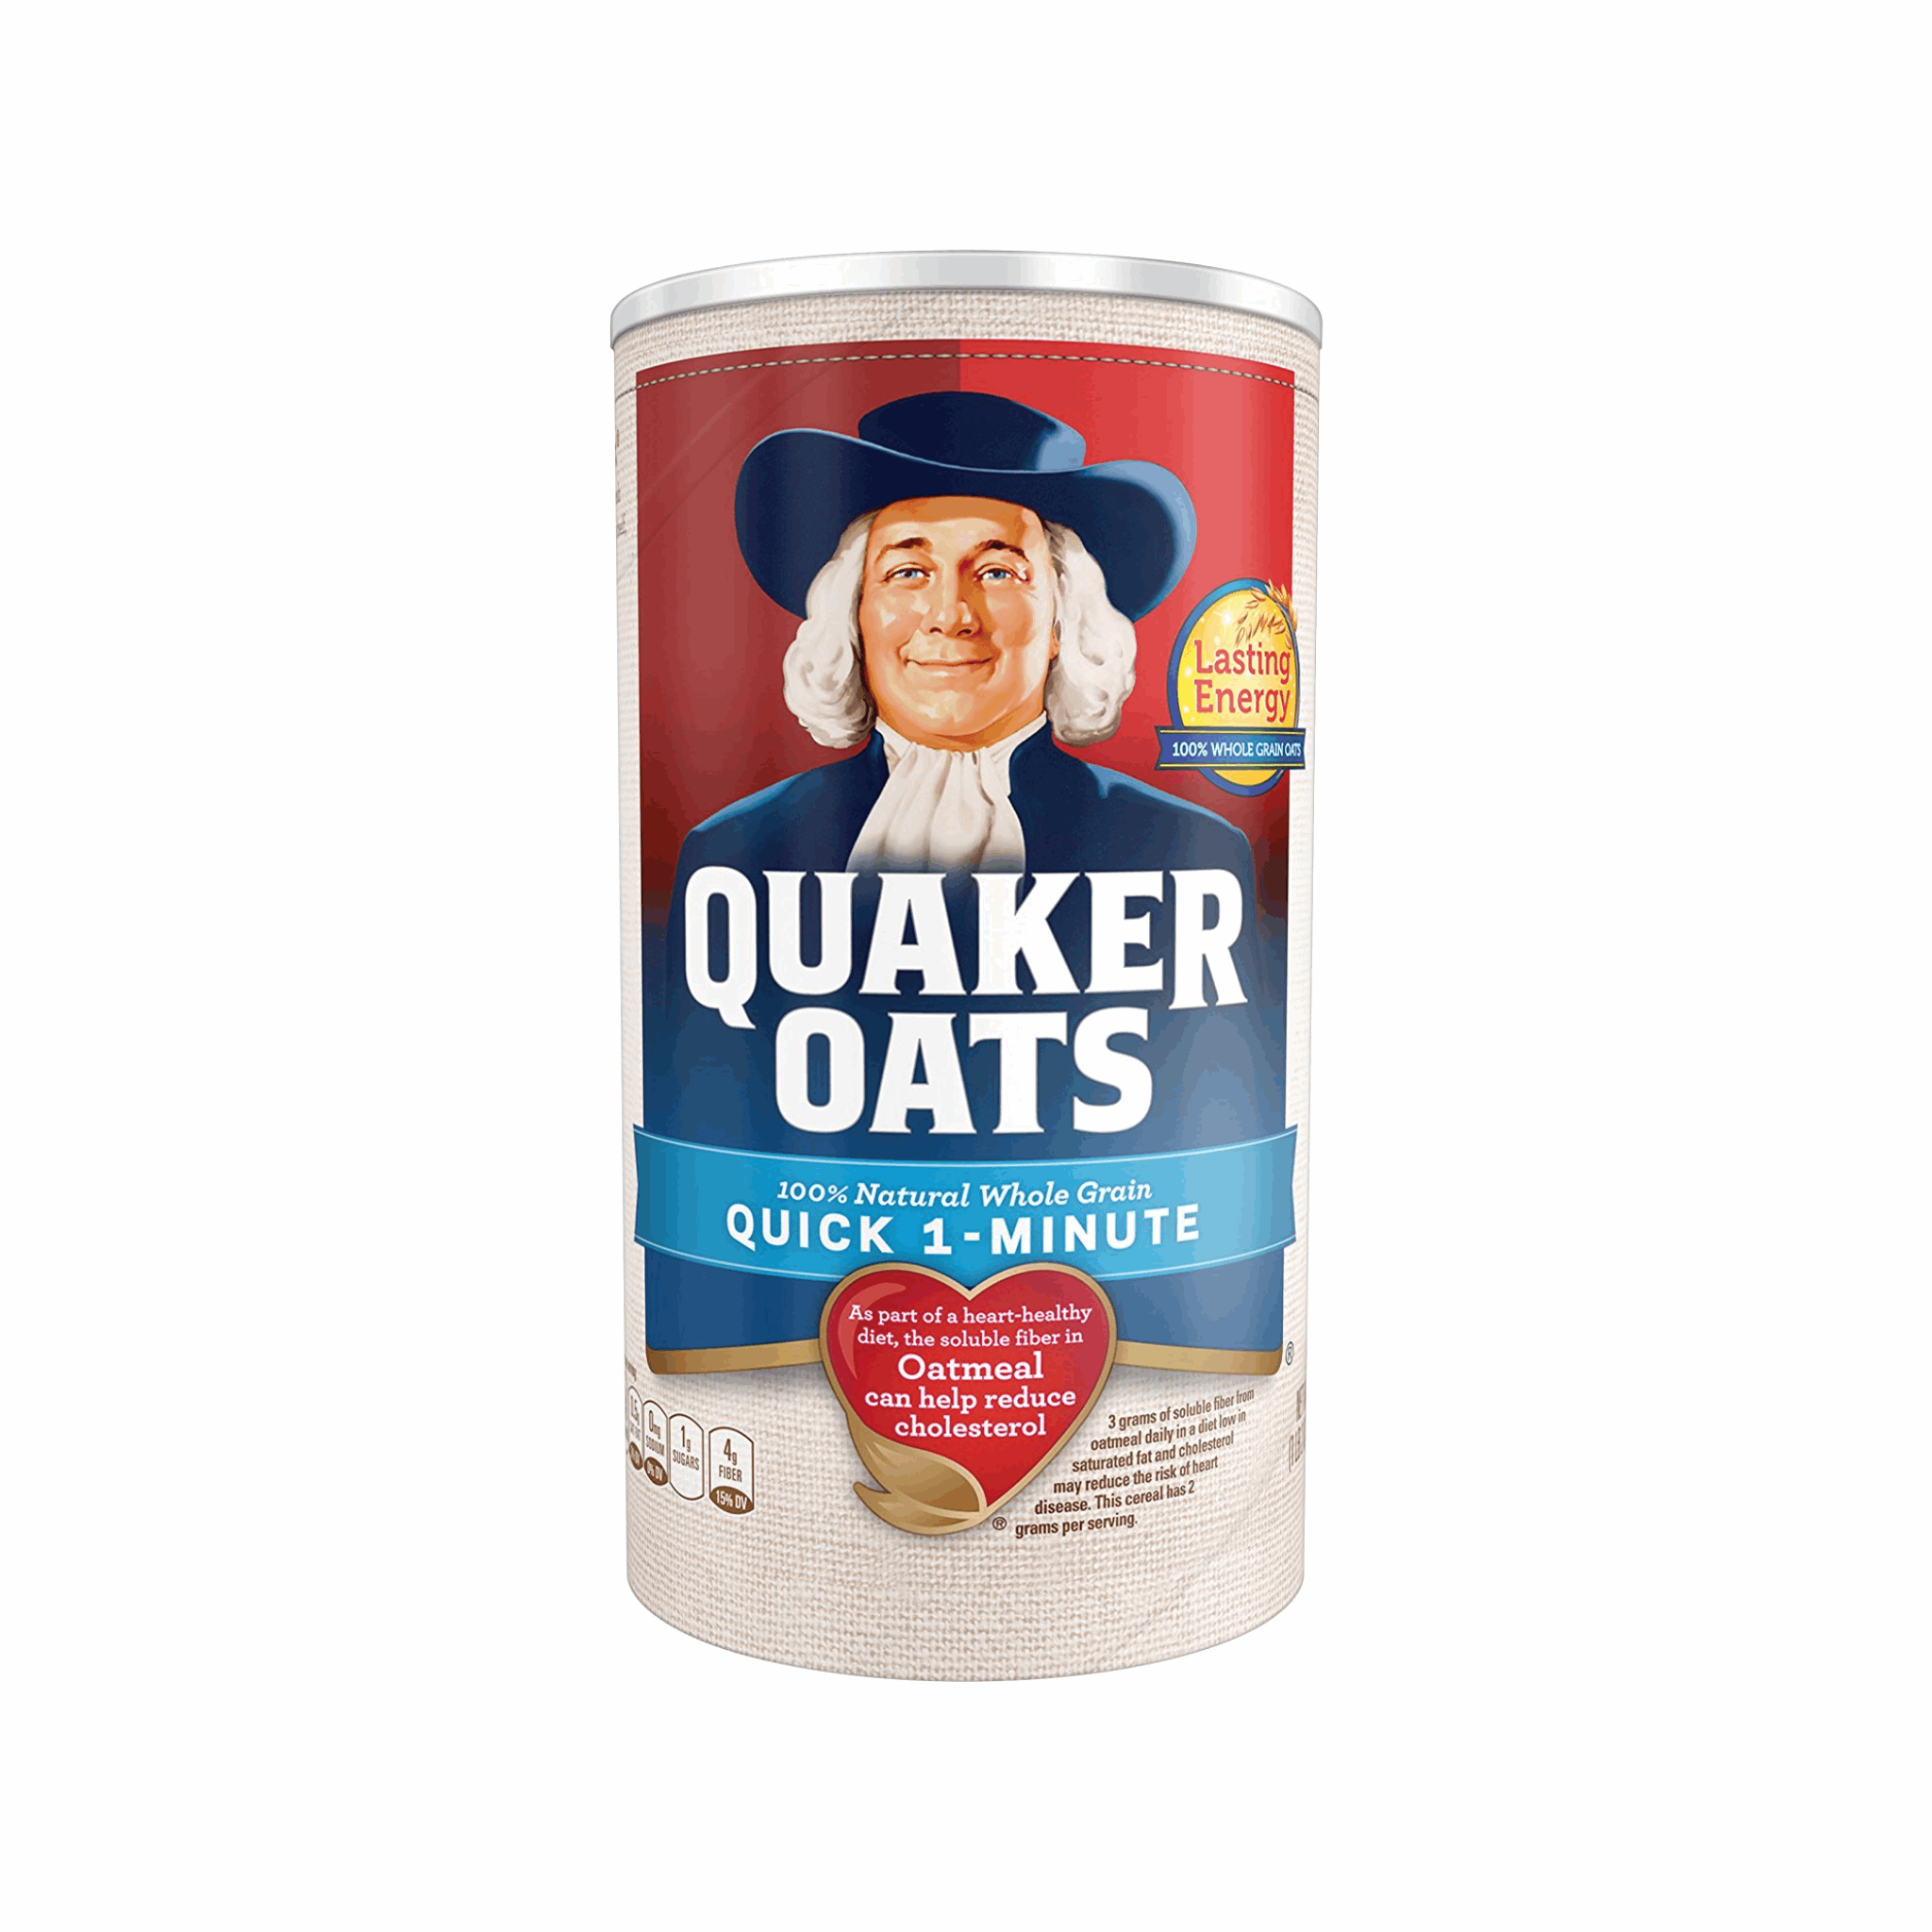 Quaker Oats Whole Grain Quick 1-Minute Oats 18 Oz